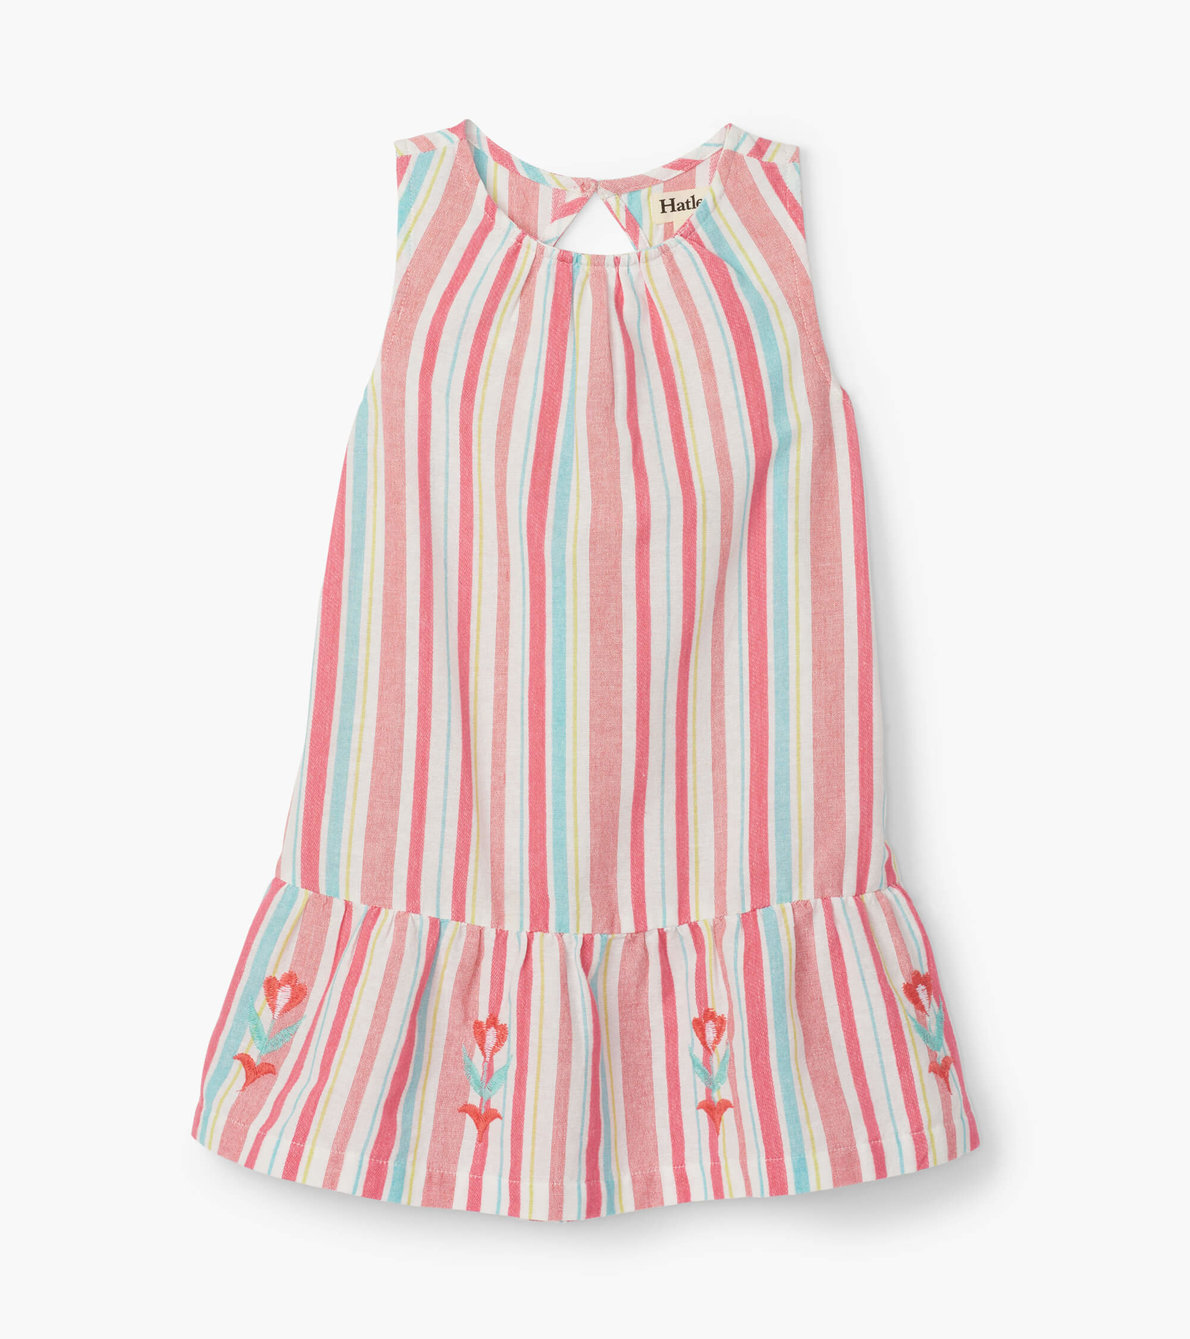 View larger image of Pink Lemonade Stripe Sleeveless Dress